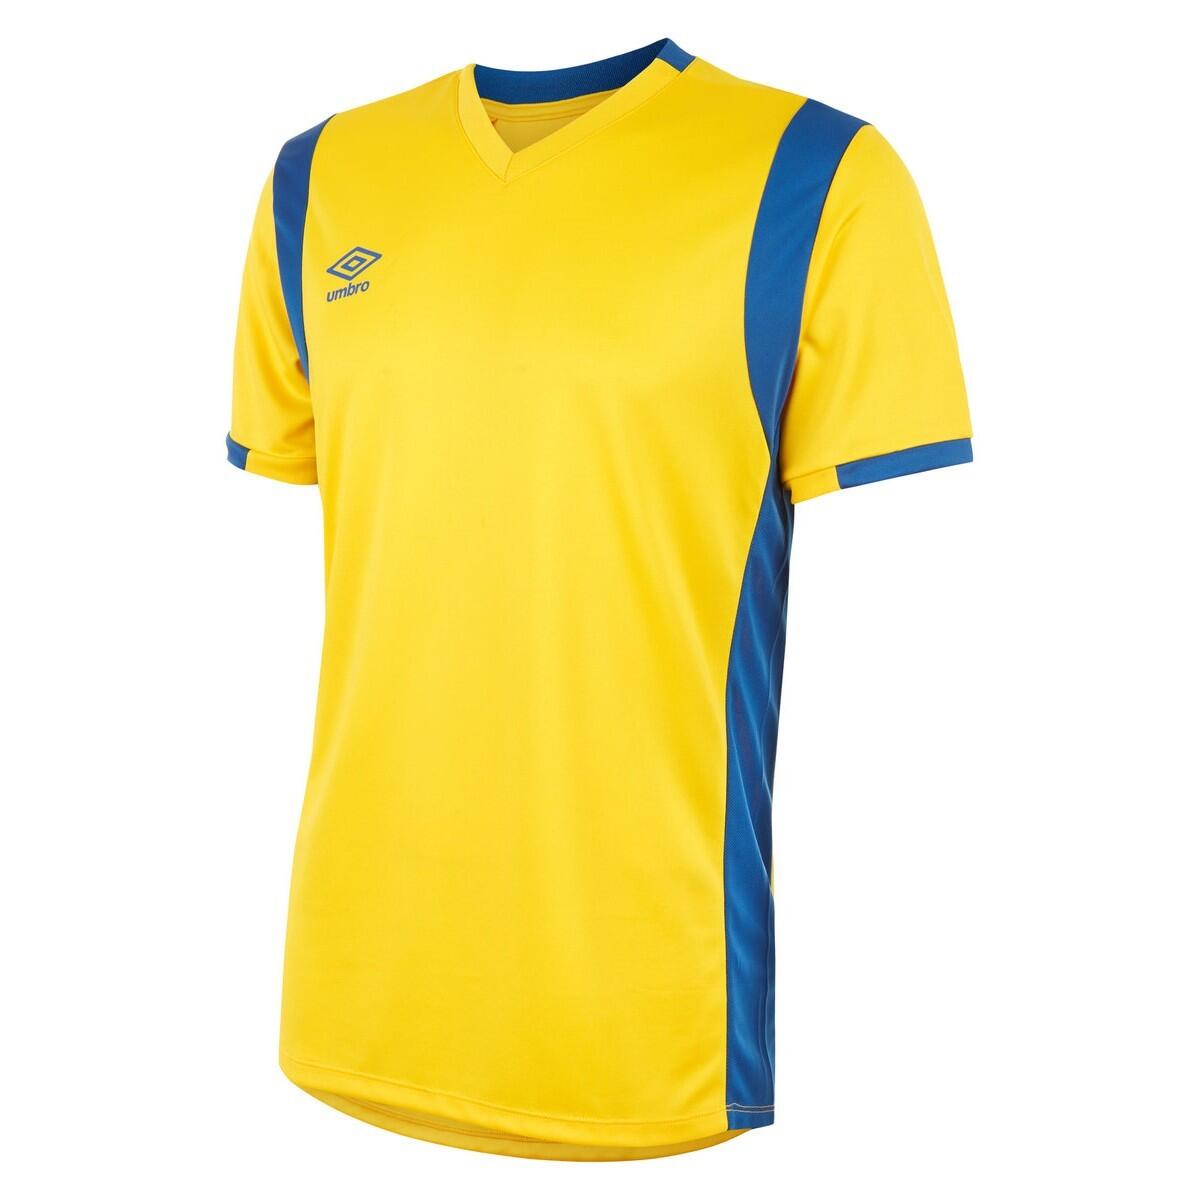 UMBRO Mens Spartan ShortSleeved Jersey (Yellow/Royal Blue)